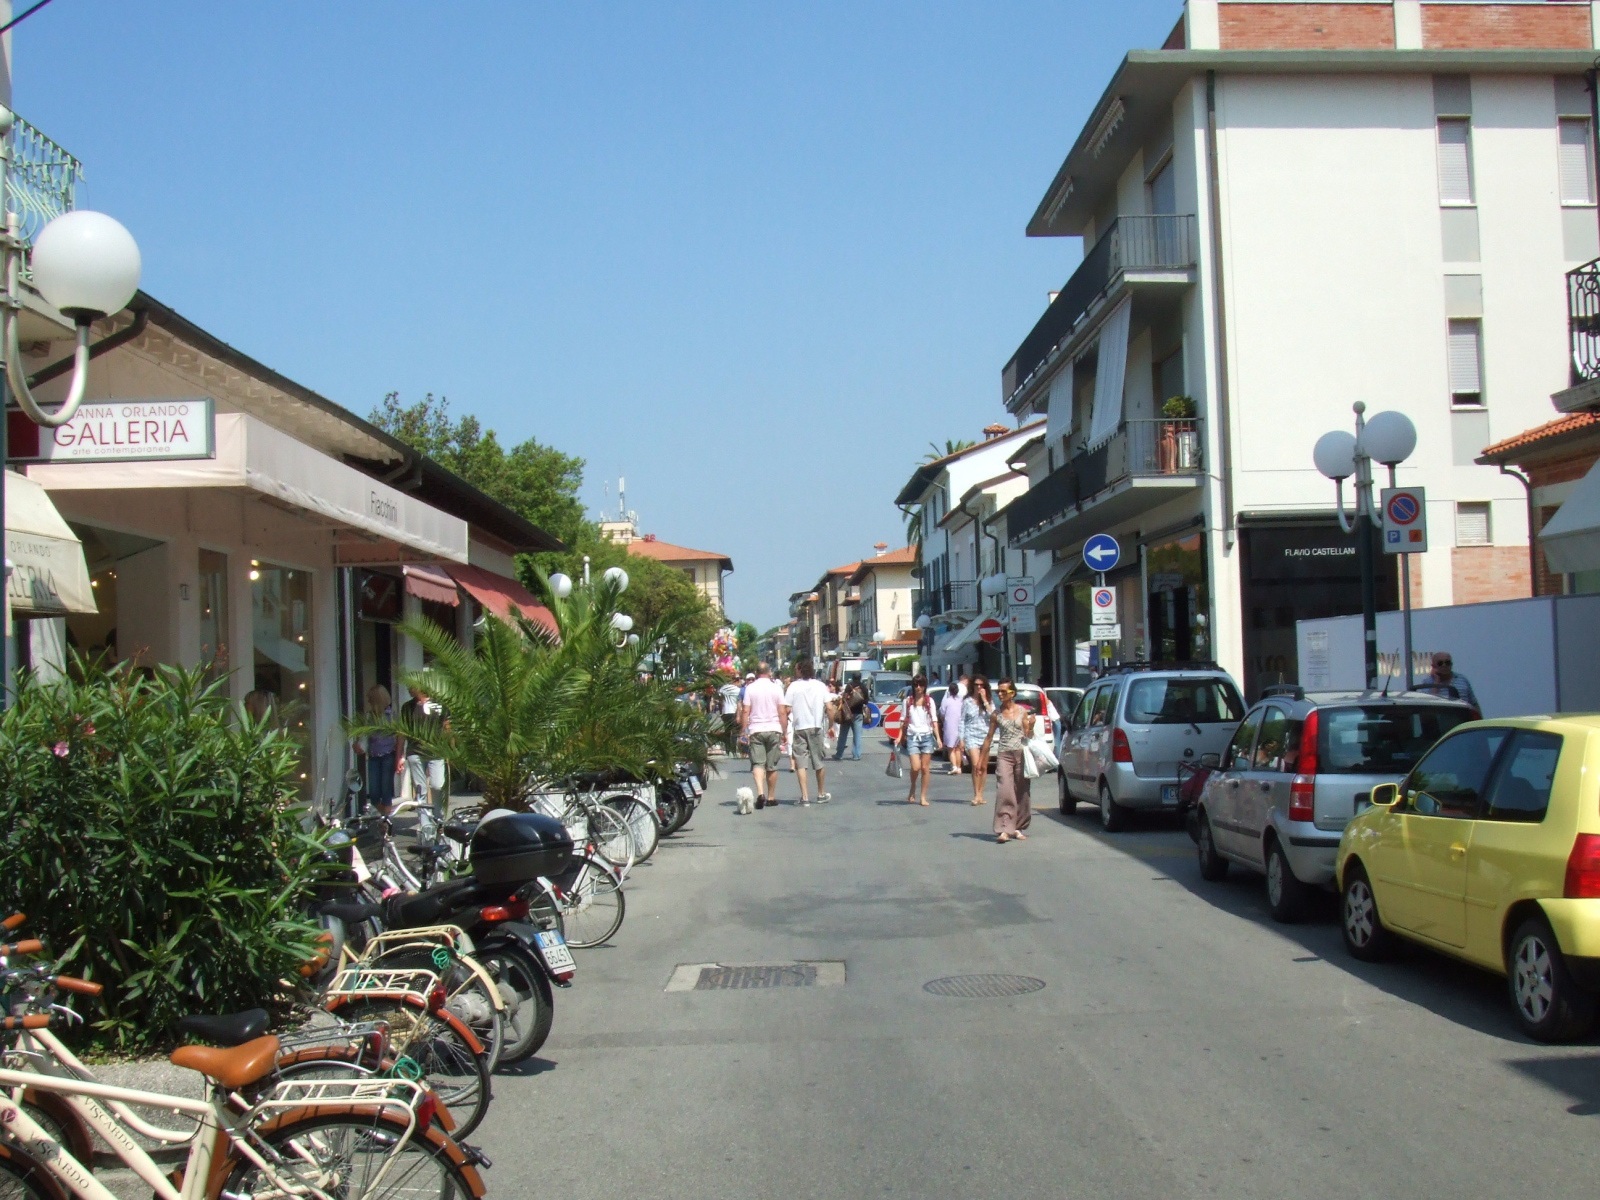 Walking down the street in the resort of Forte dei Marmi, Italy